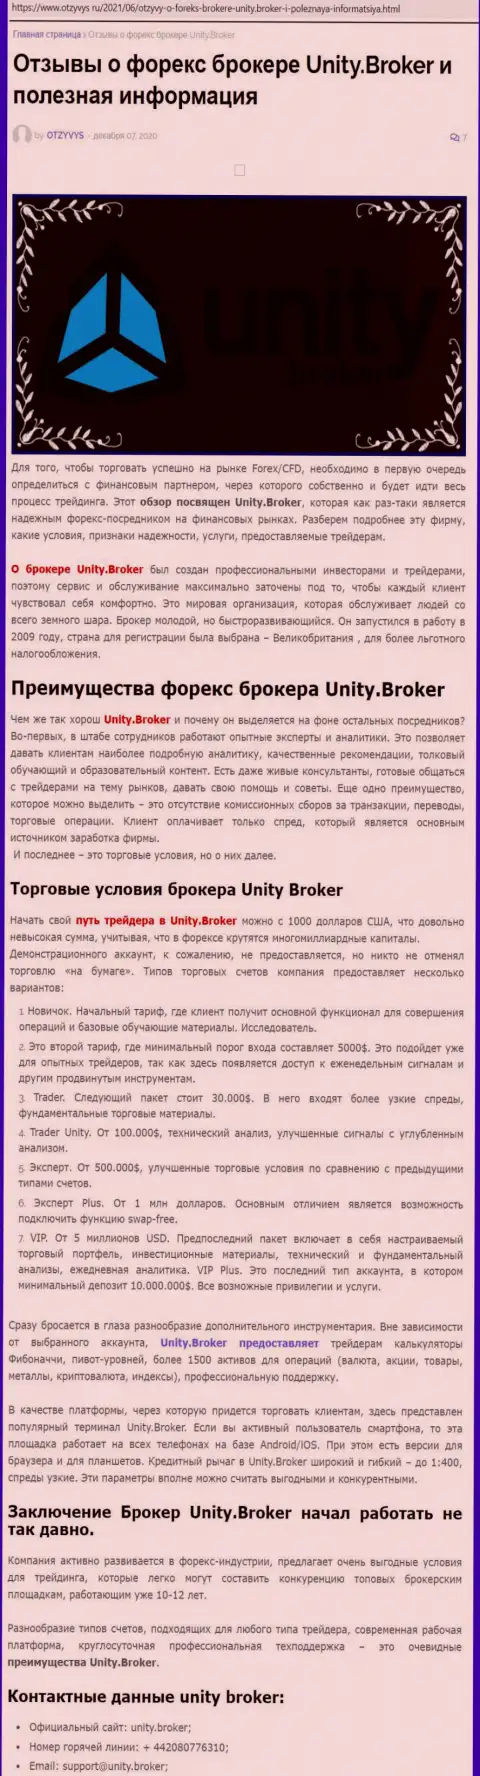 Публикация о форекс-дилере Unity Broker на интернет-сервисе отзывус ру